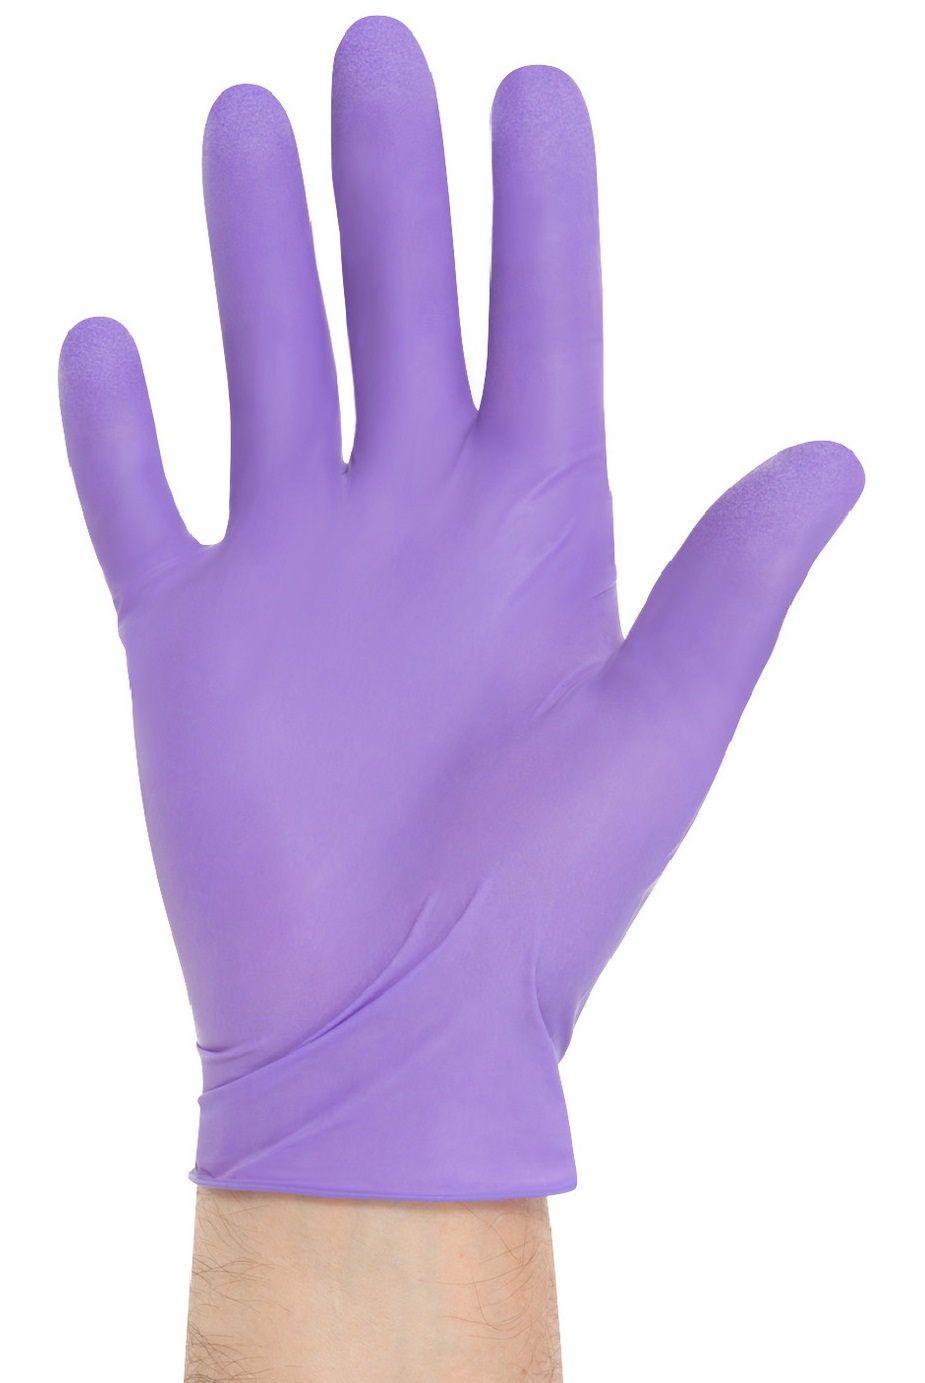 PURPLE NITRILE* Exam Gloves, Medical Exam Gloves | HALYARD